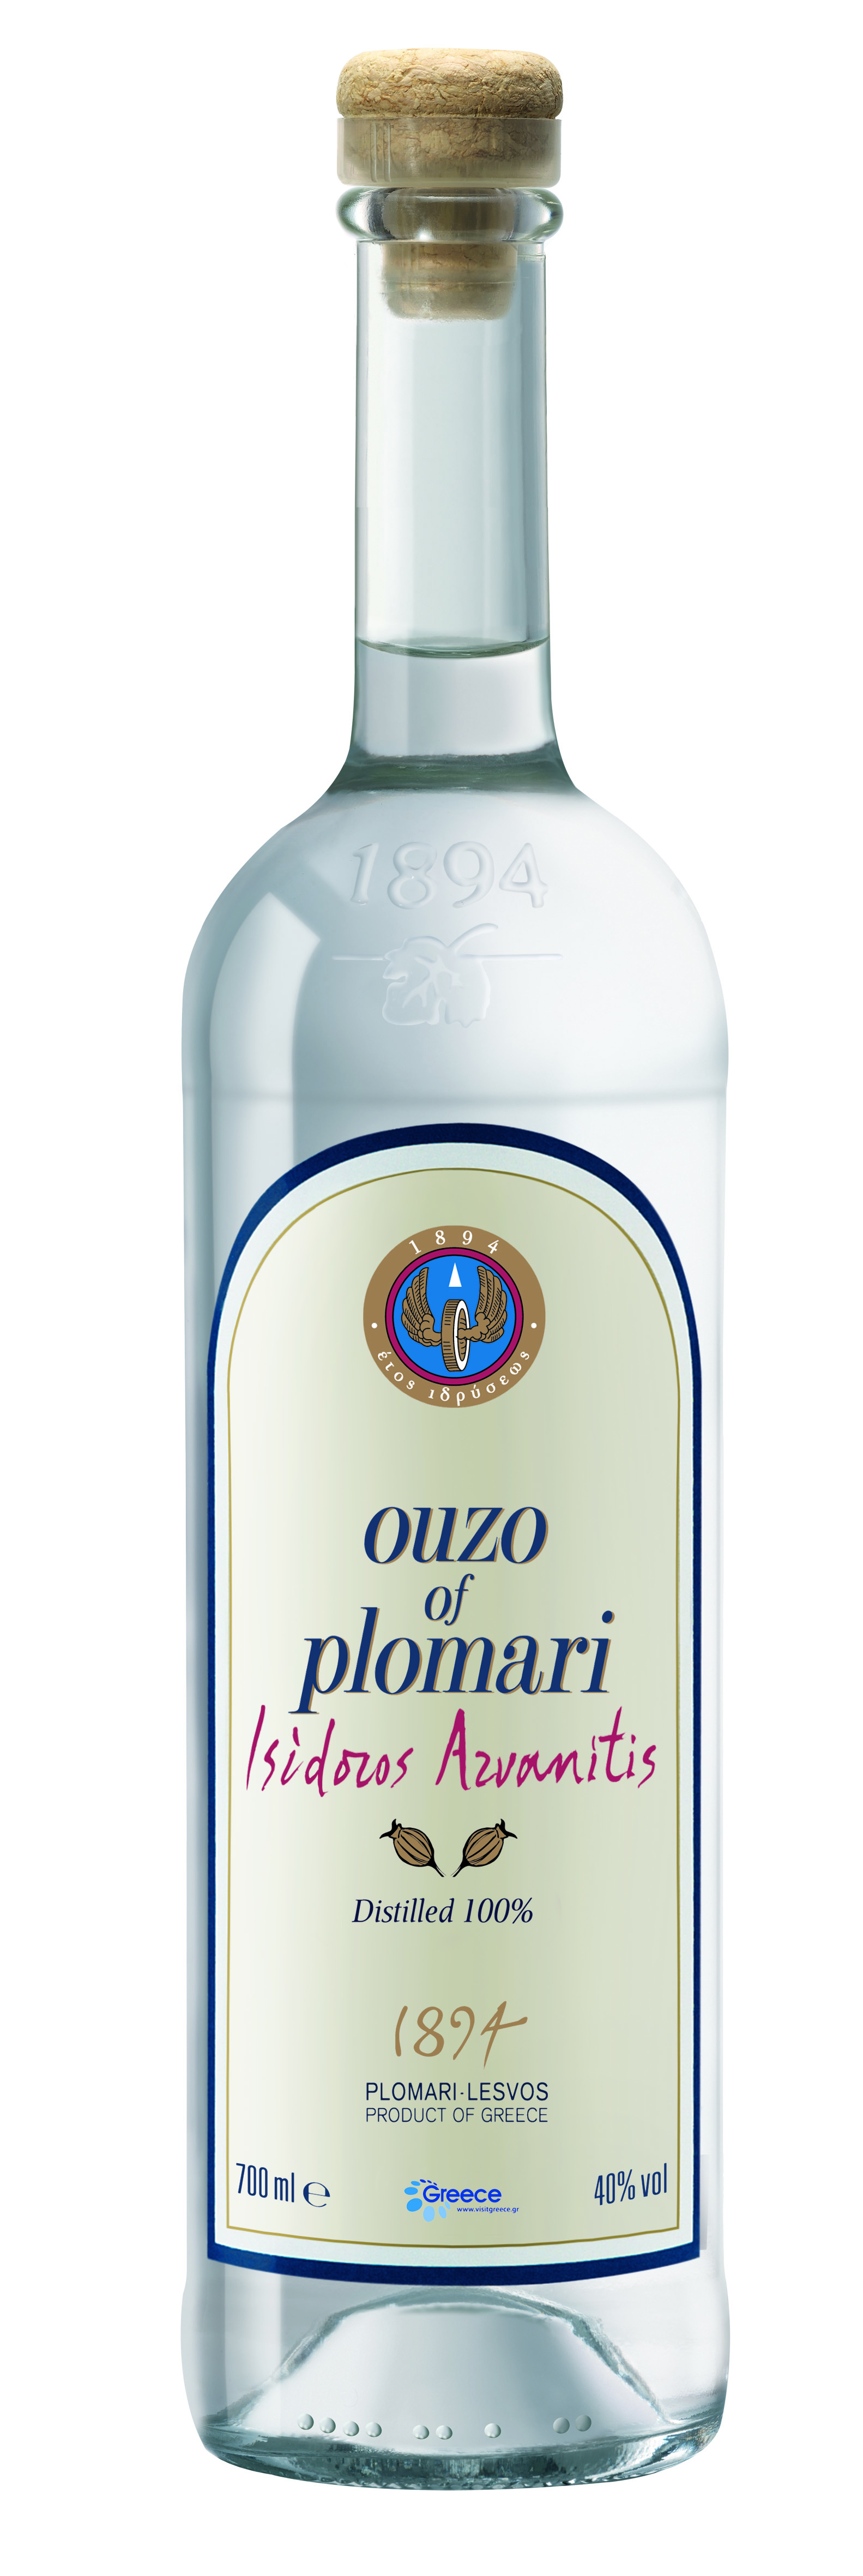 Ouzo Plomari Issidoros Arvanitis Ouzo, ~ Olivenöl Metaxa, Weine, | 40% Weinversand Shop-Kreta 0.7L